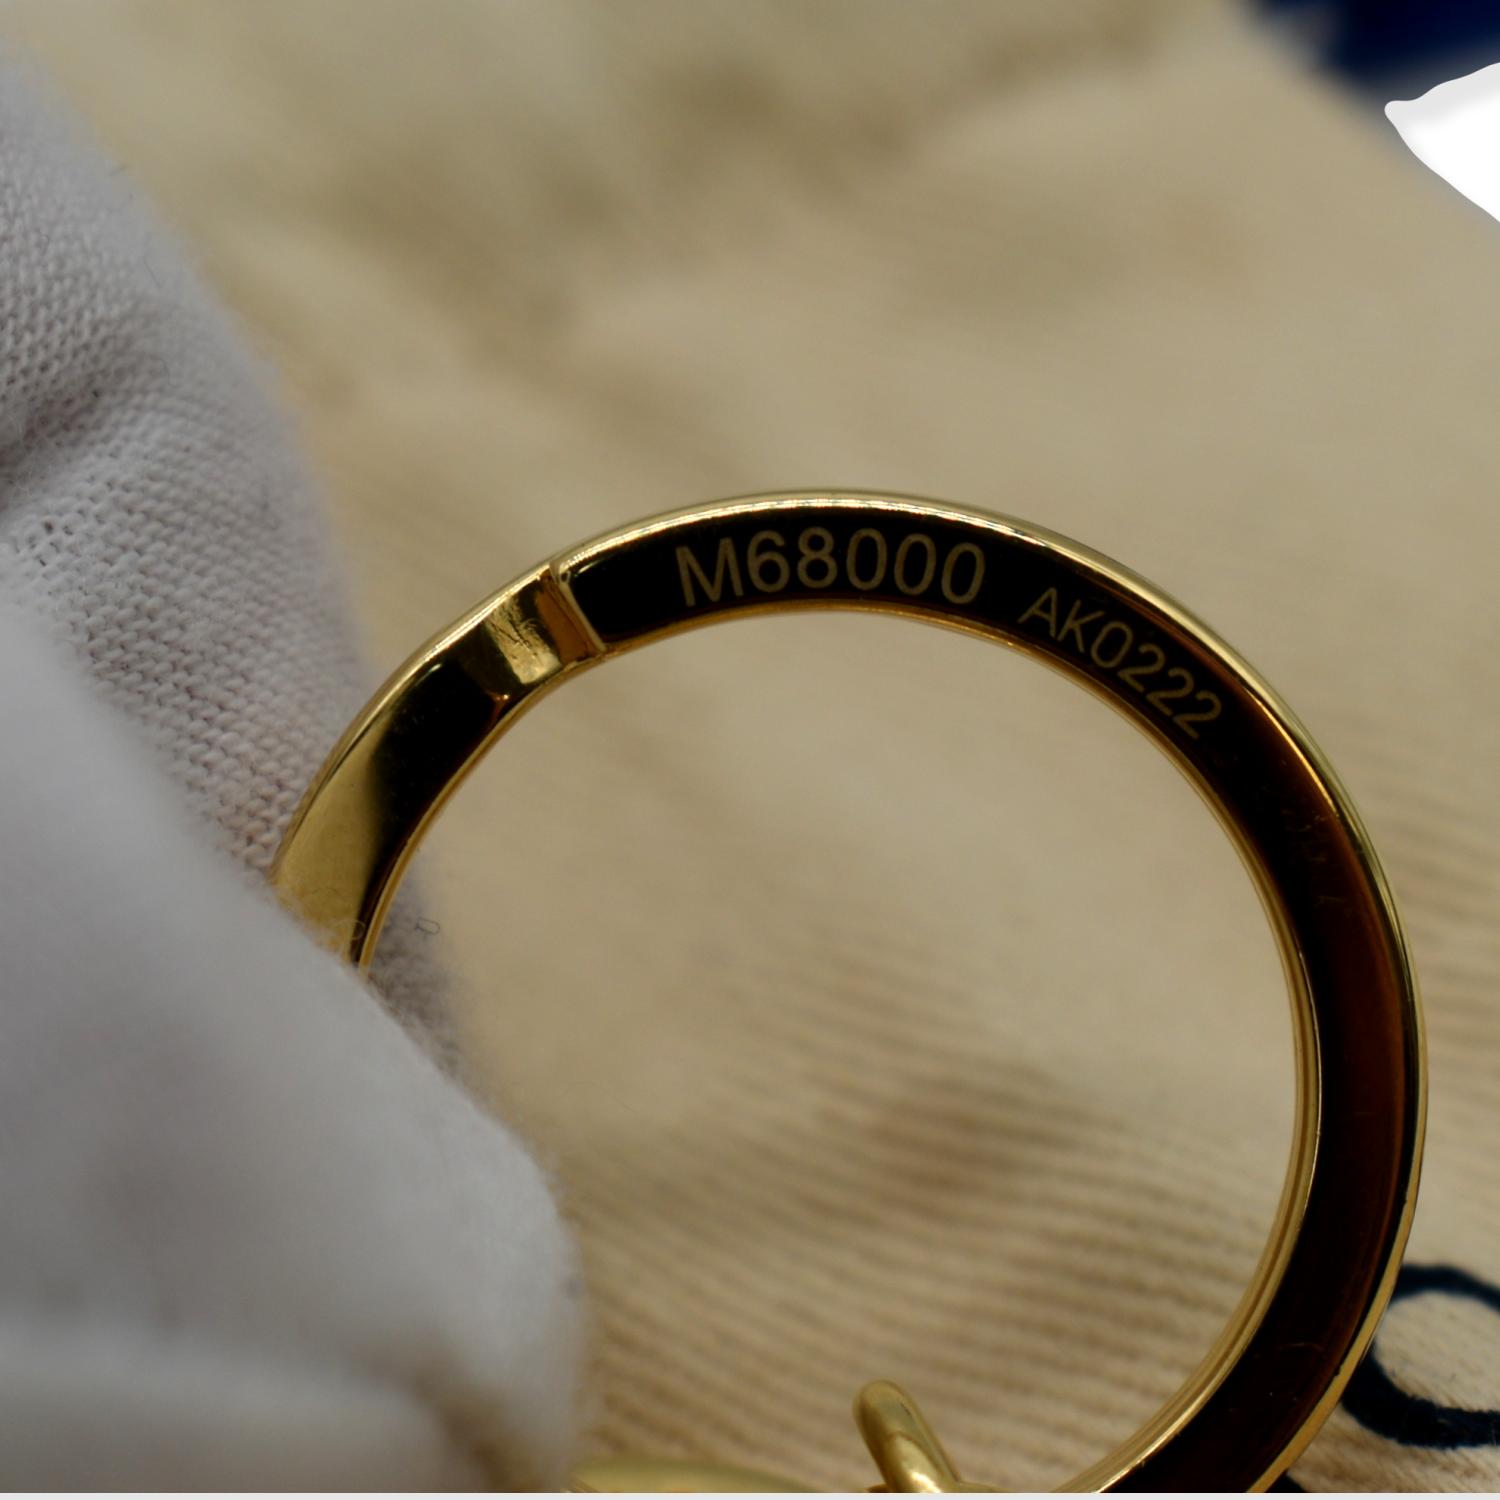 Louis Vuitton Gold Circle Bag Charm and Key Holder – The Closet